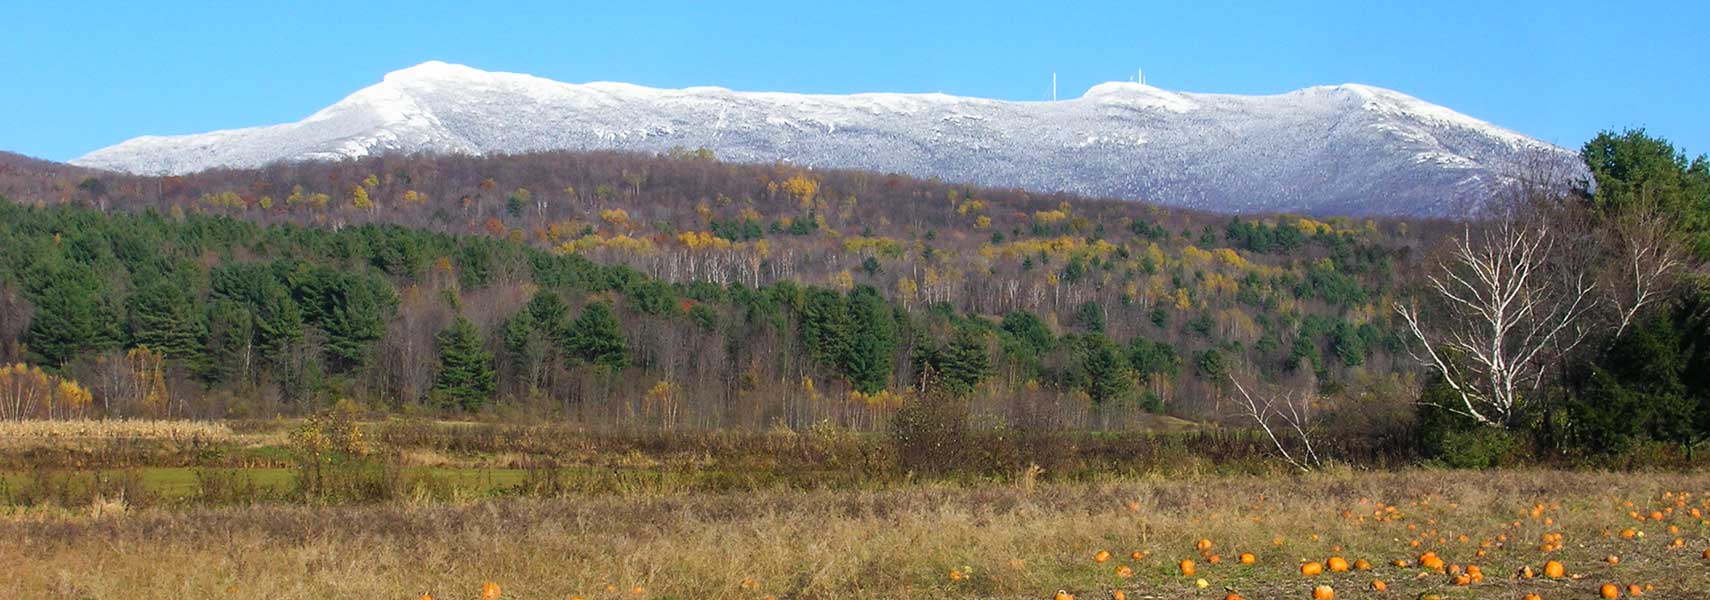 Mount Mansfield in Vermont, USA